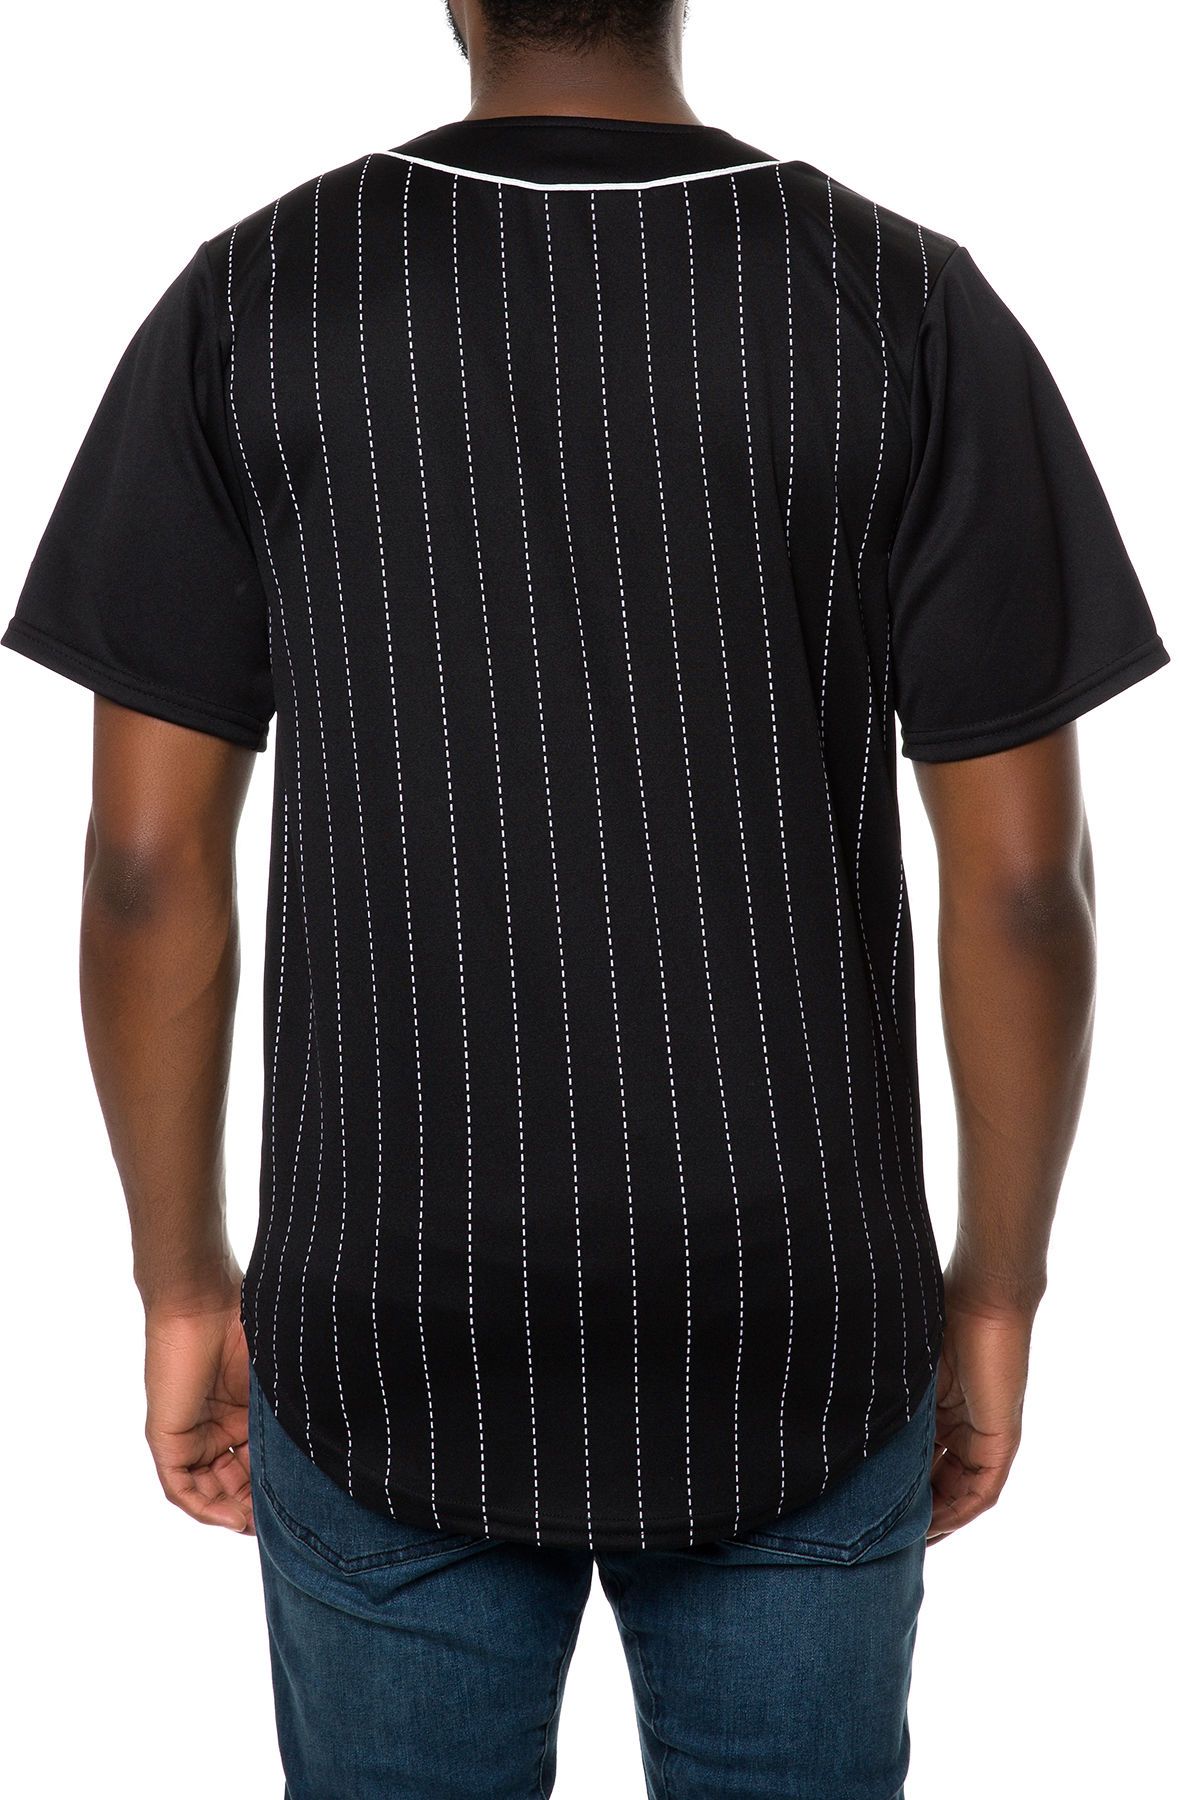 Civil Shirt Pin Stripe Baseball Jersey Black